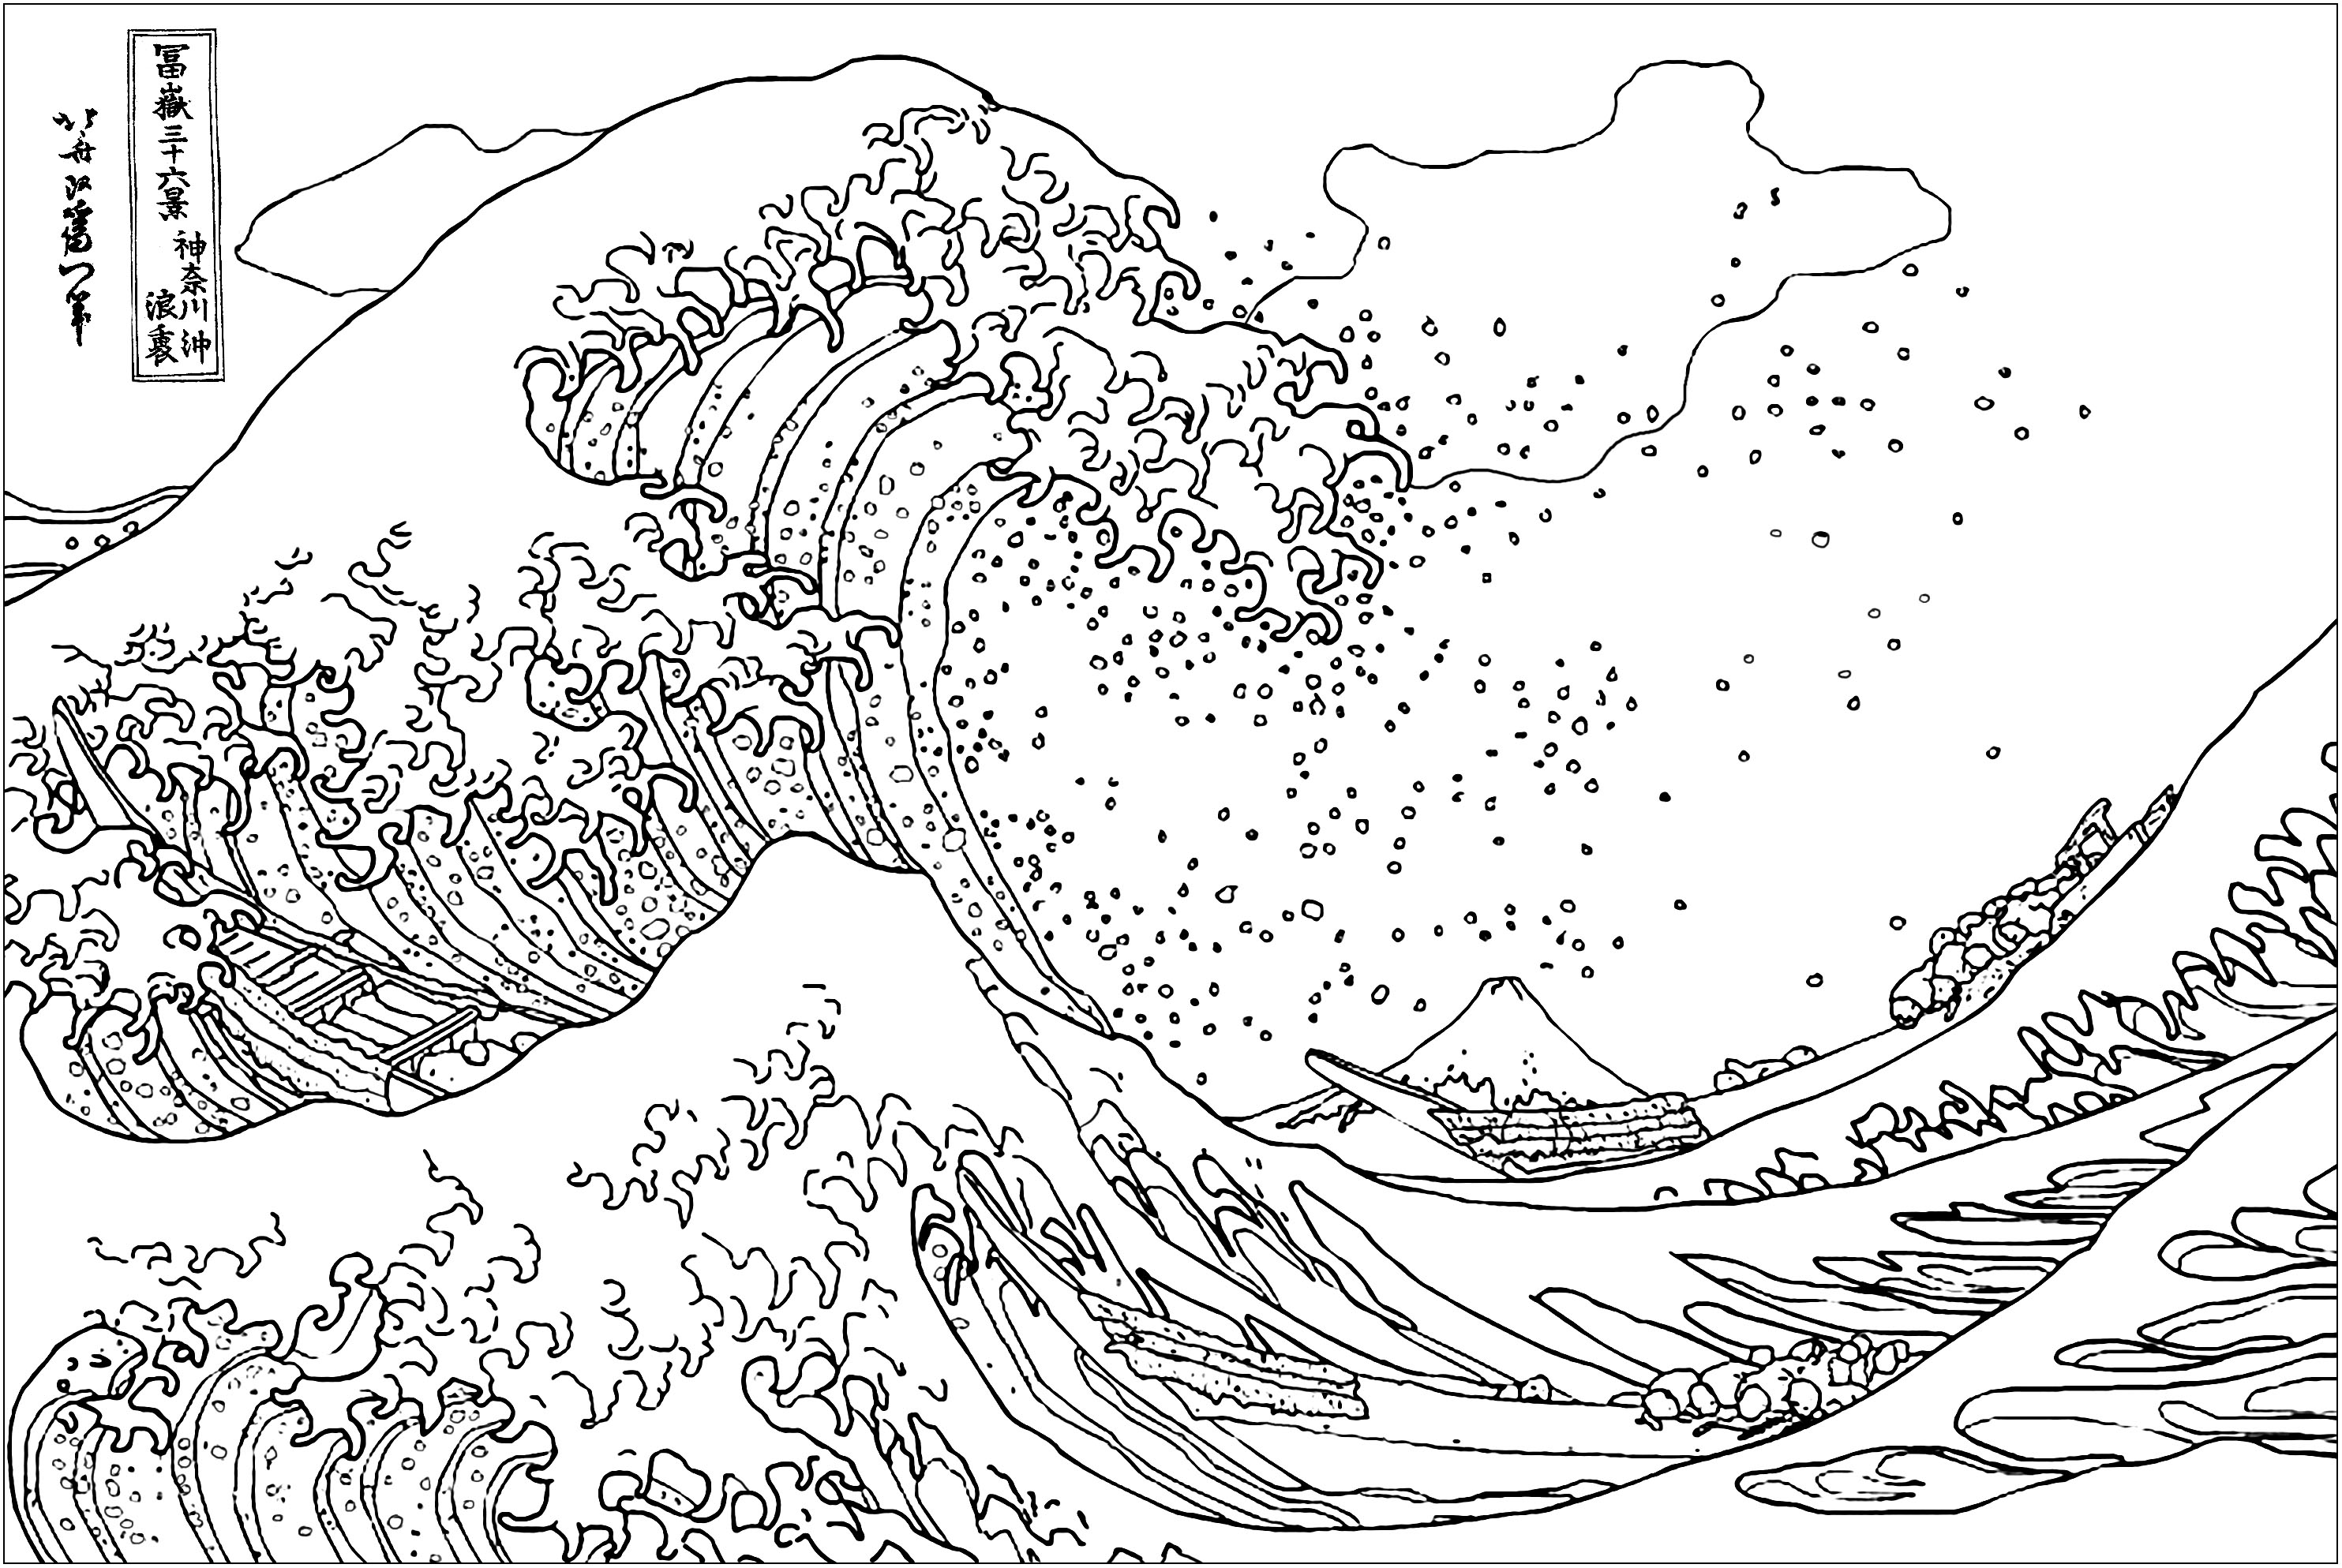 Página para colorear inspirada en esta famosísima xilografía del artista japonés del ukiyo-e Hokusai.